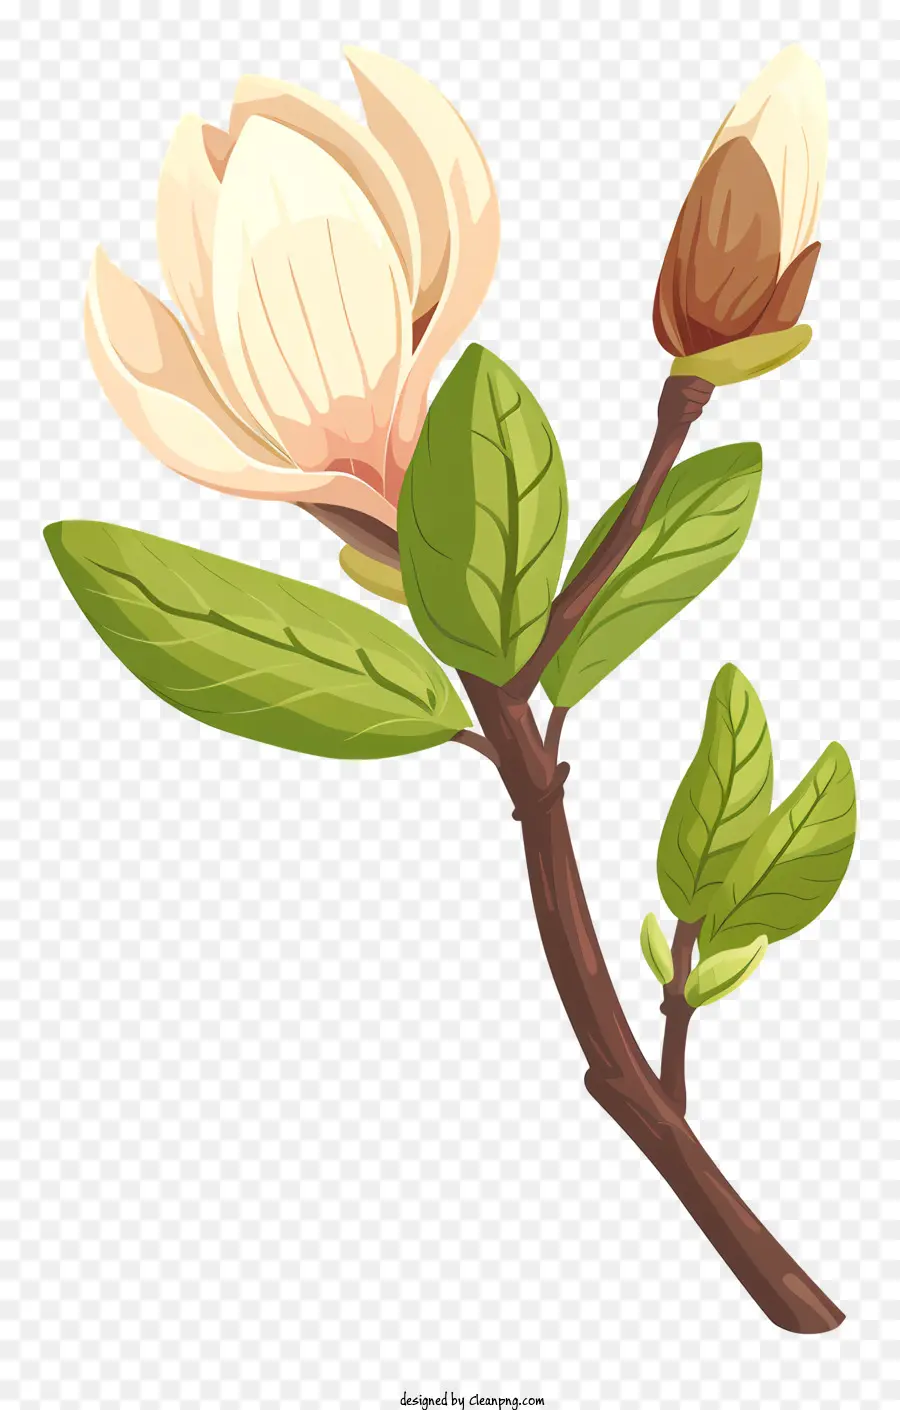 Magnolia Bud Flower Petals Stem White - Fiore bianco con foglie verdi e gemme